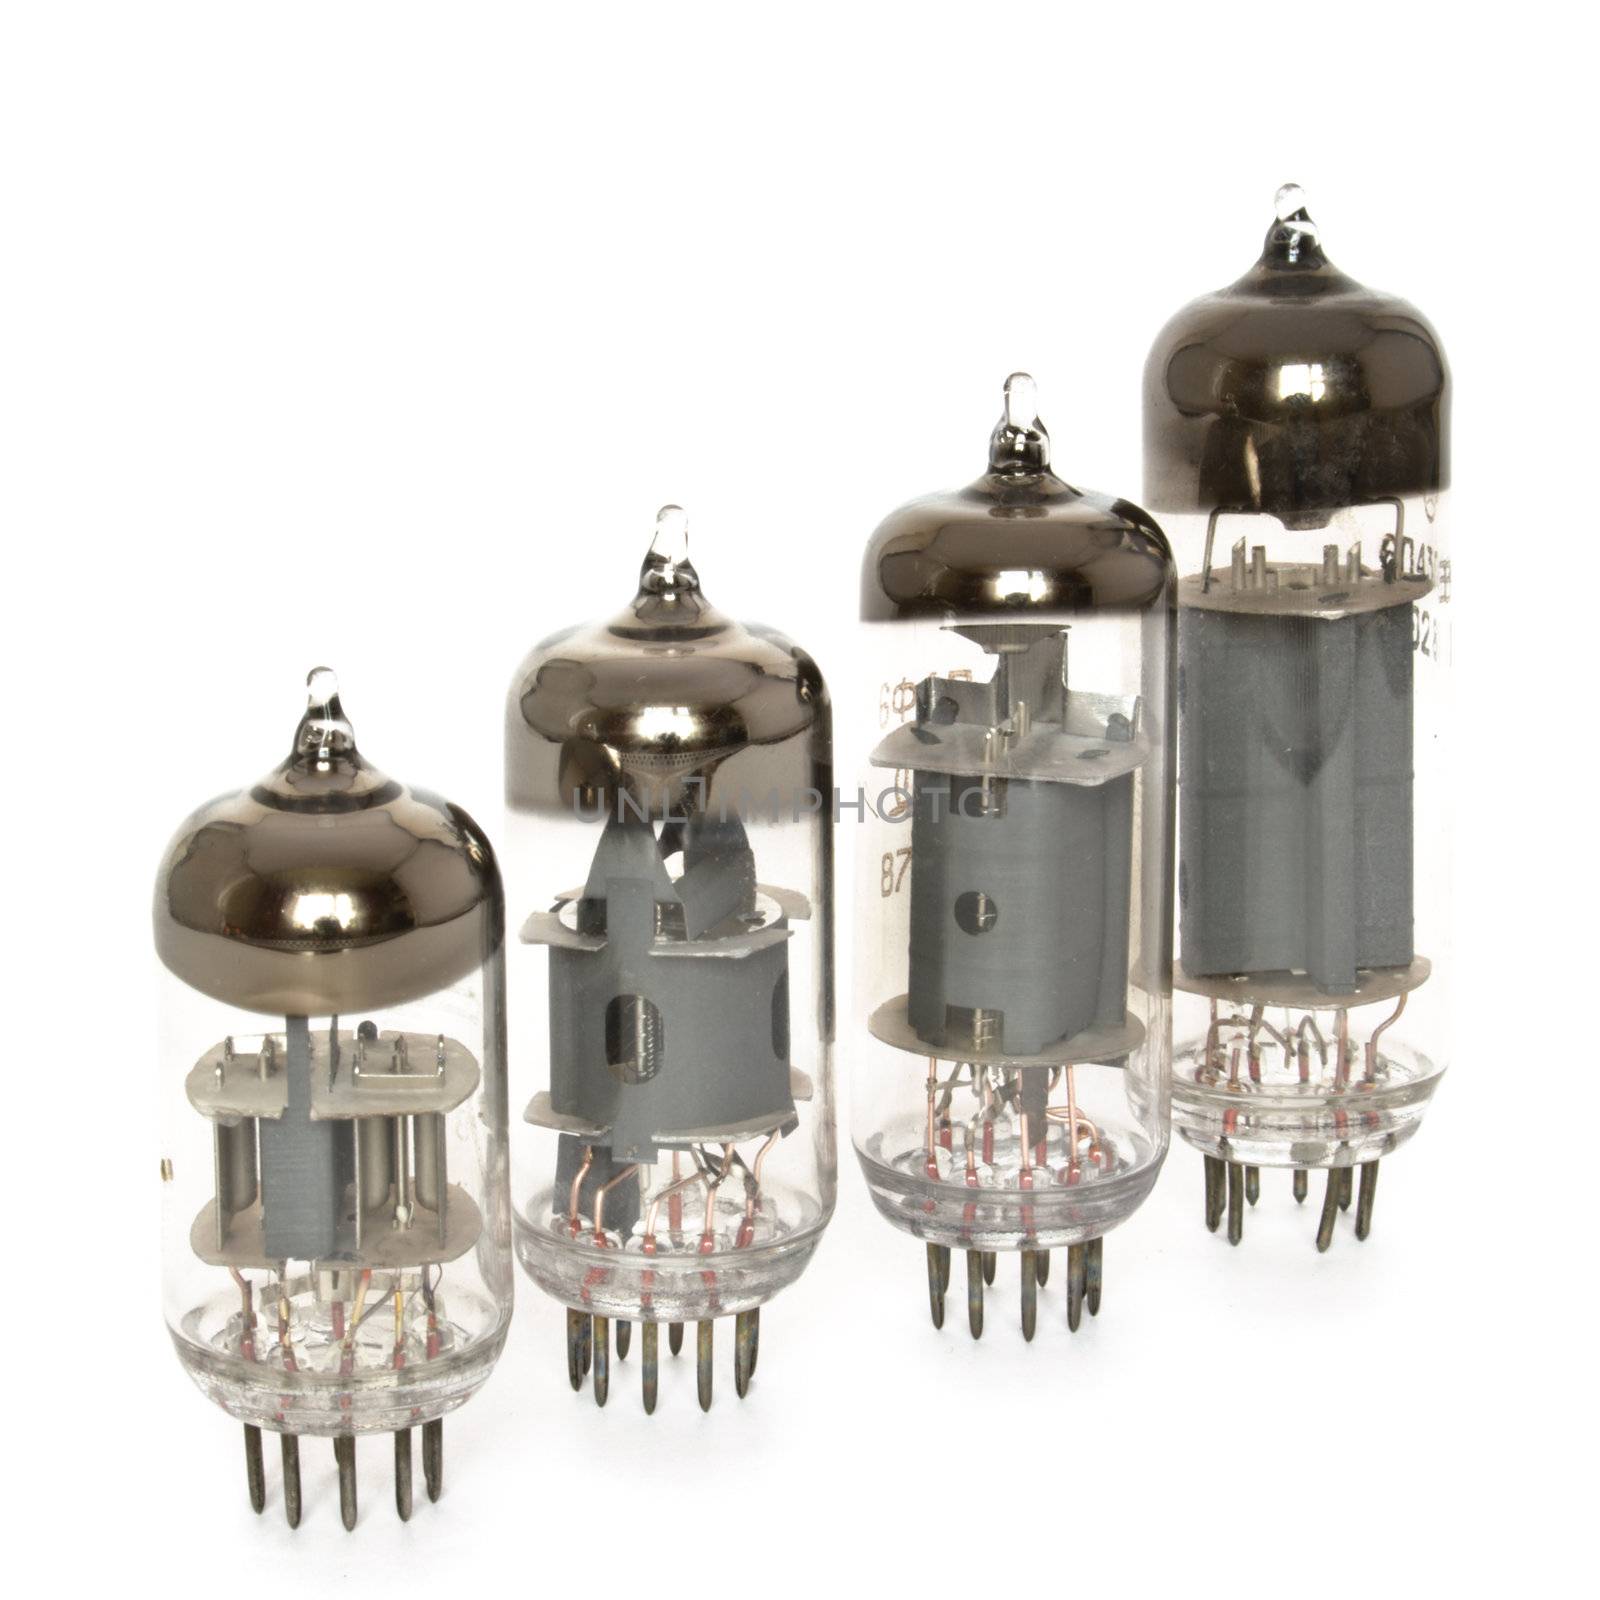 Old vacuum tubes by dimol